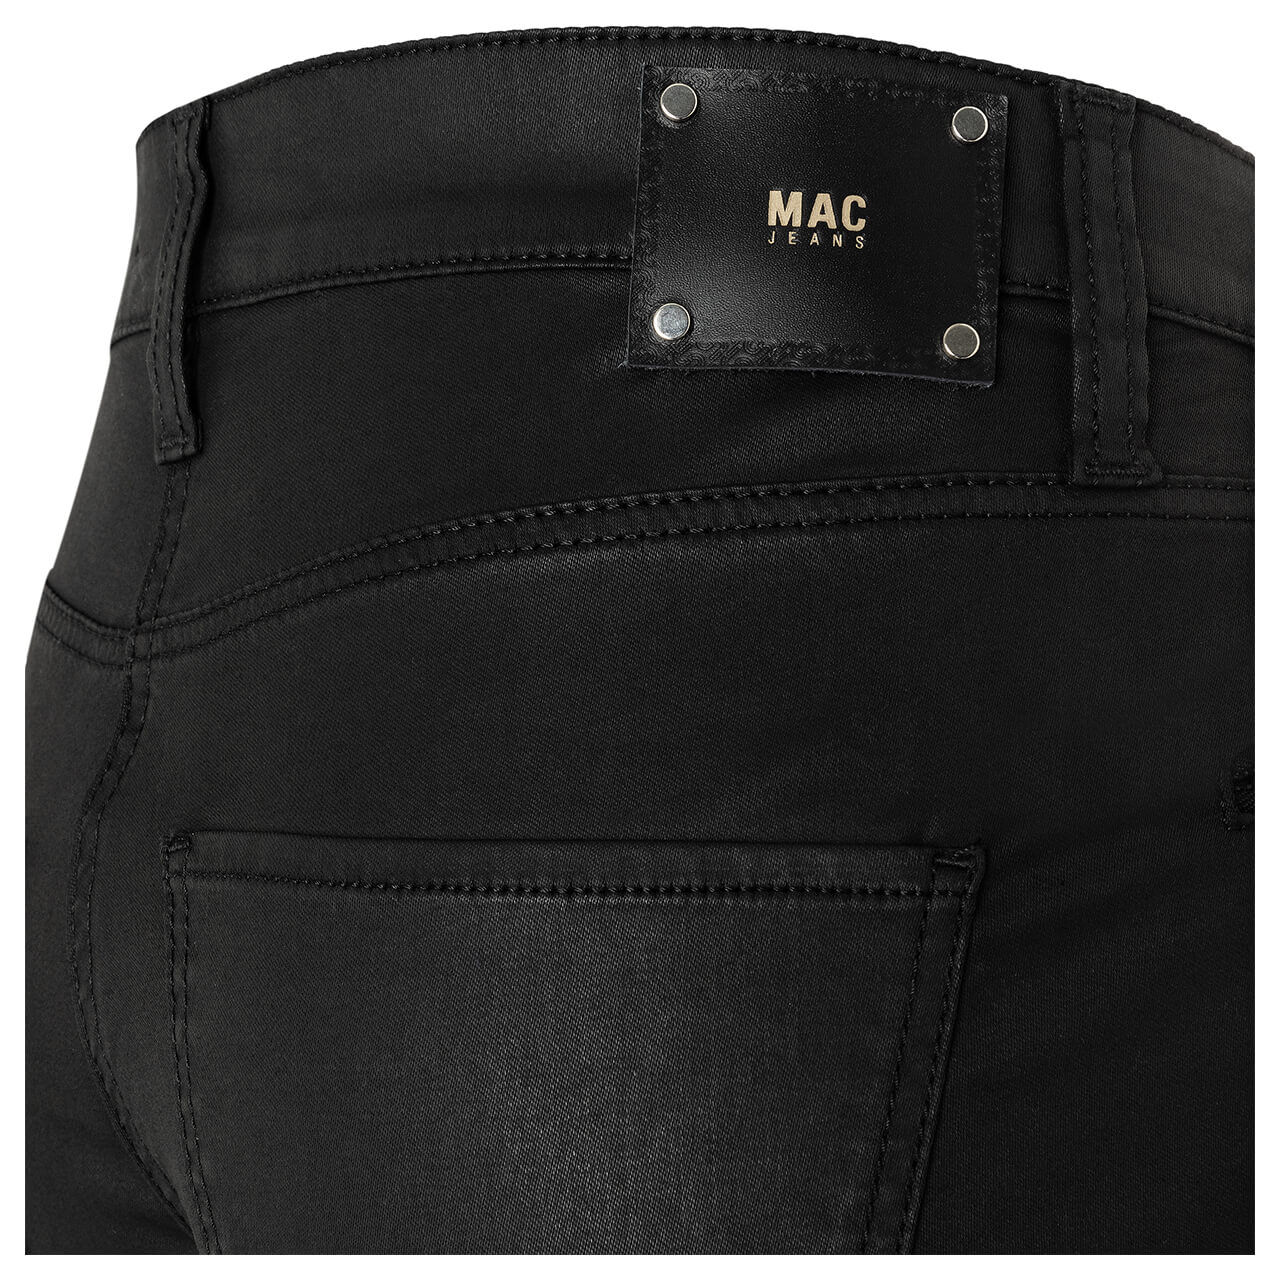 MAC Skinny Zip Hose black coated